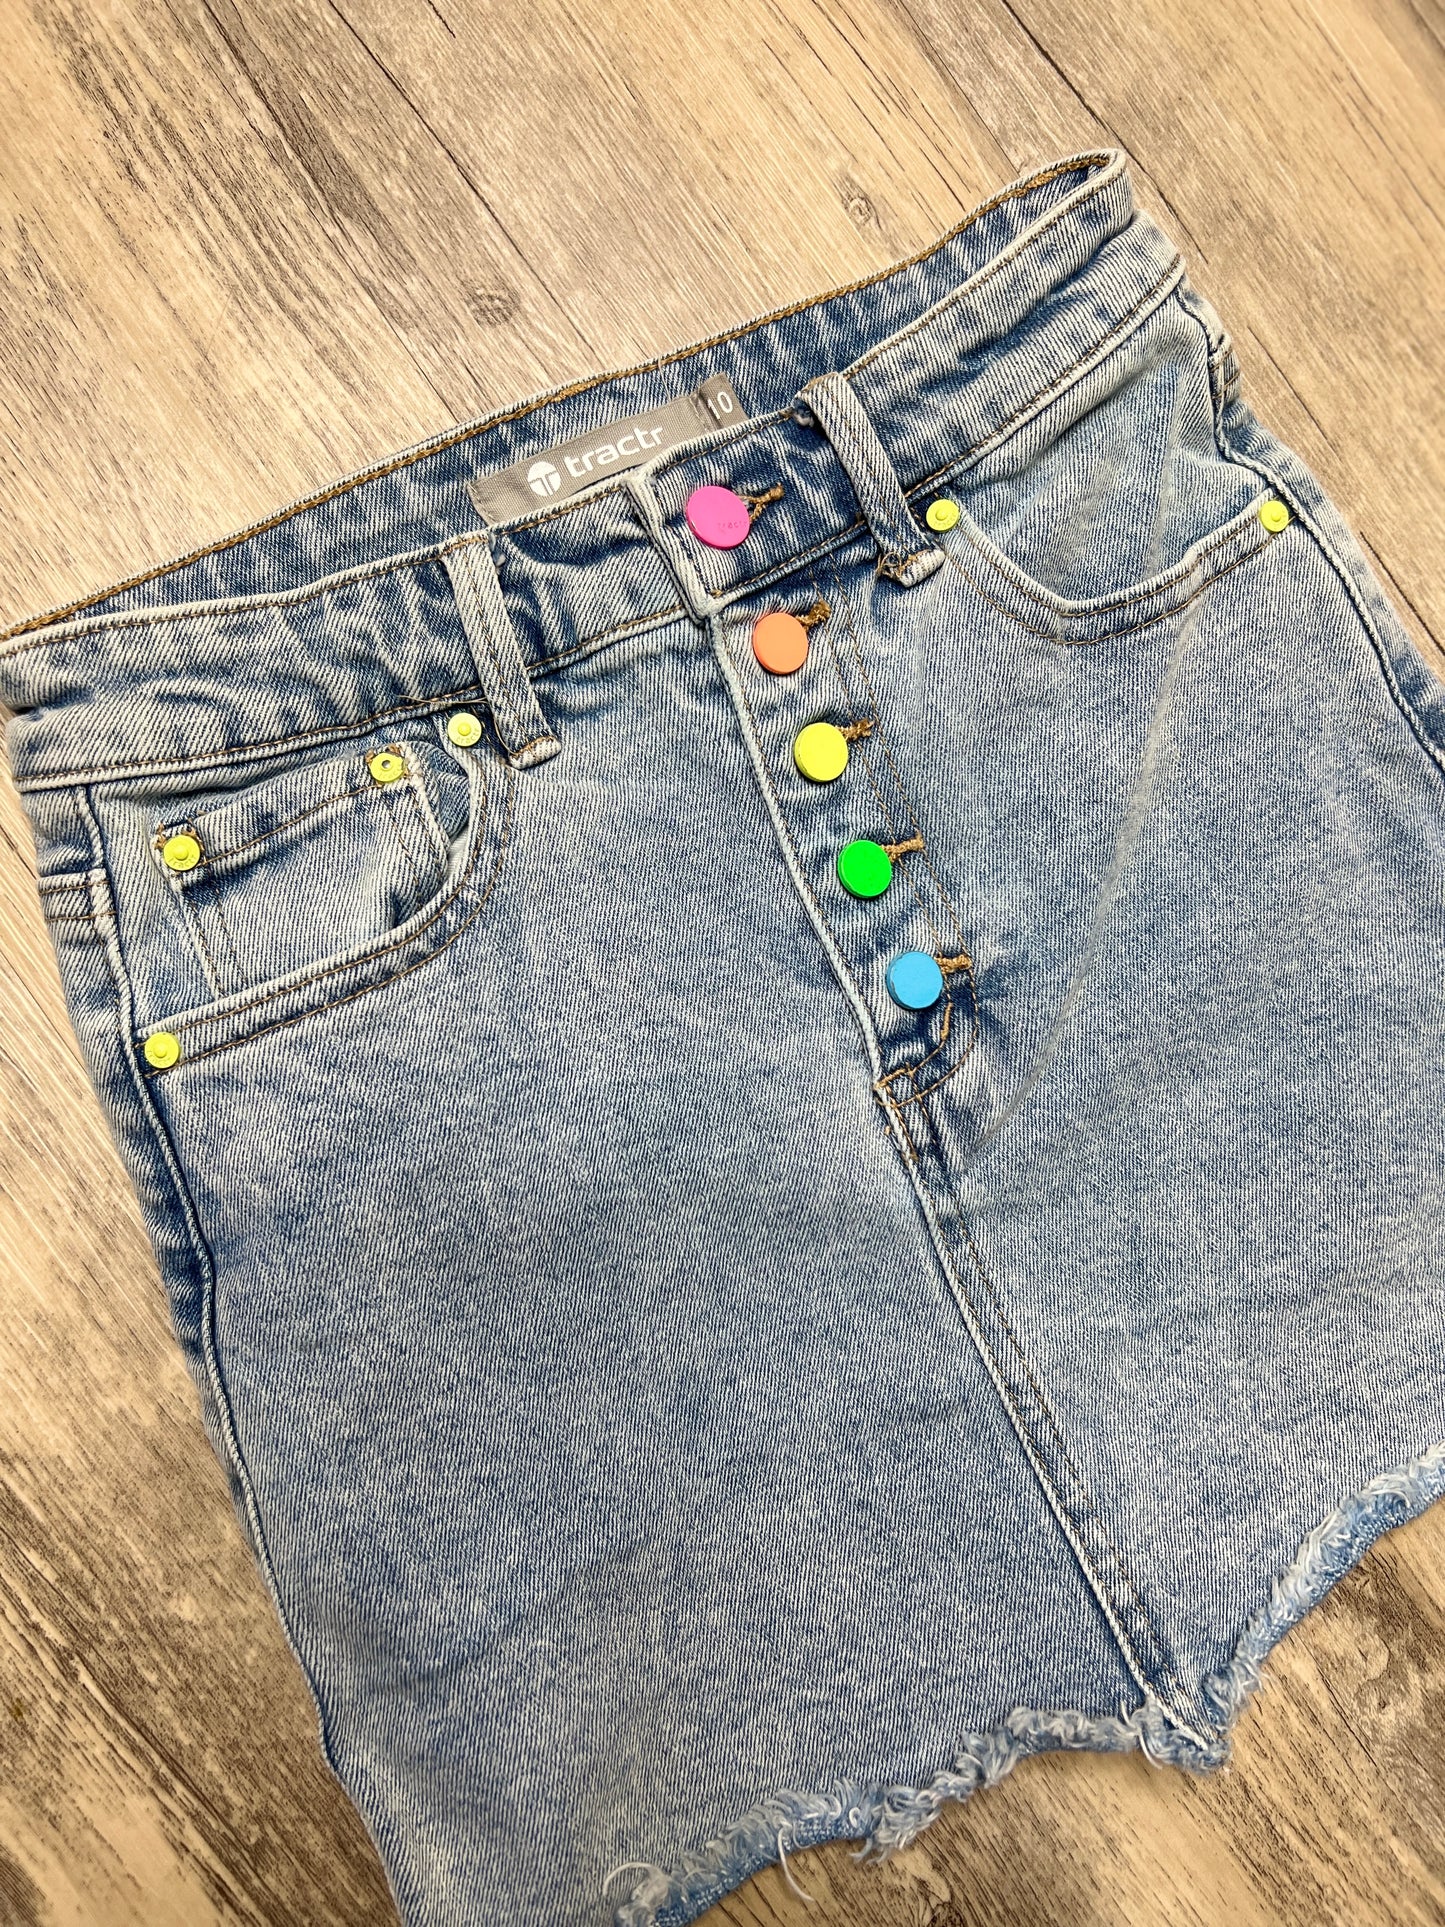 tractr Frayed Hem Rainbow Button Denim Skirt - Youth M (10)